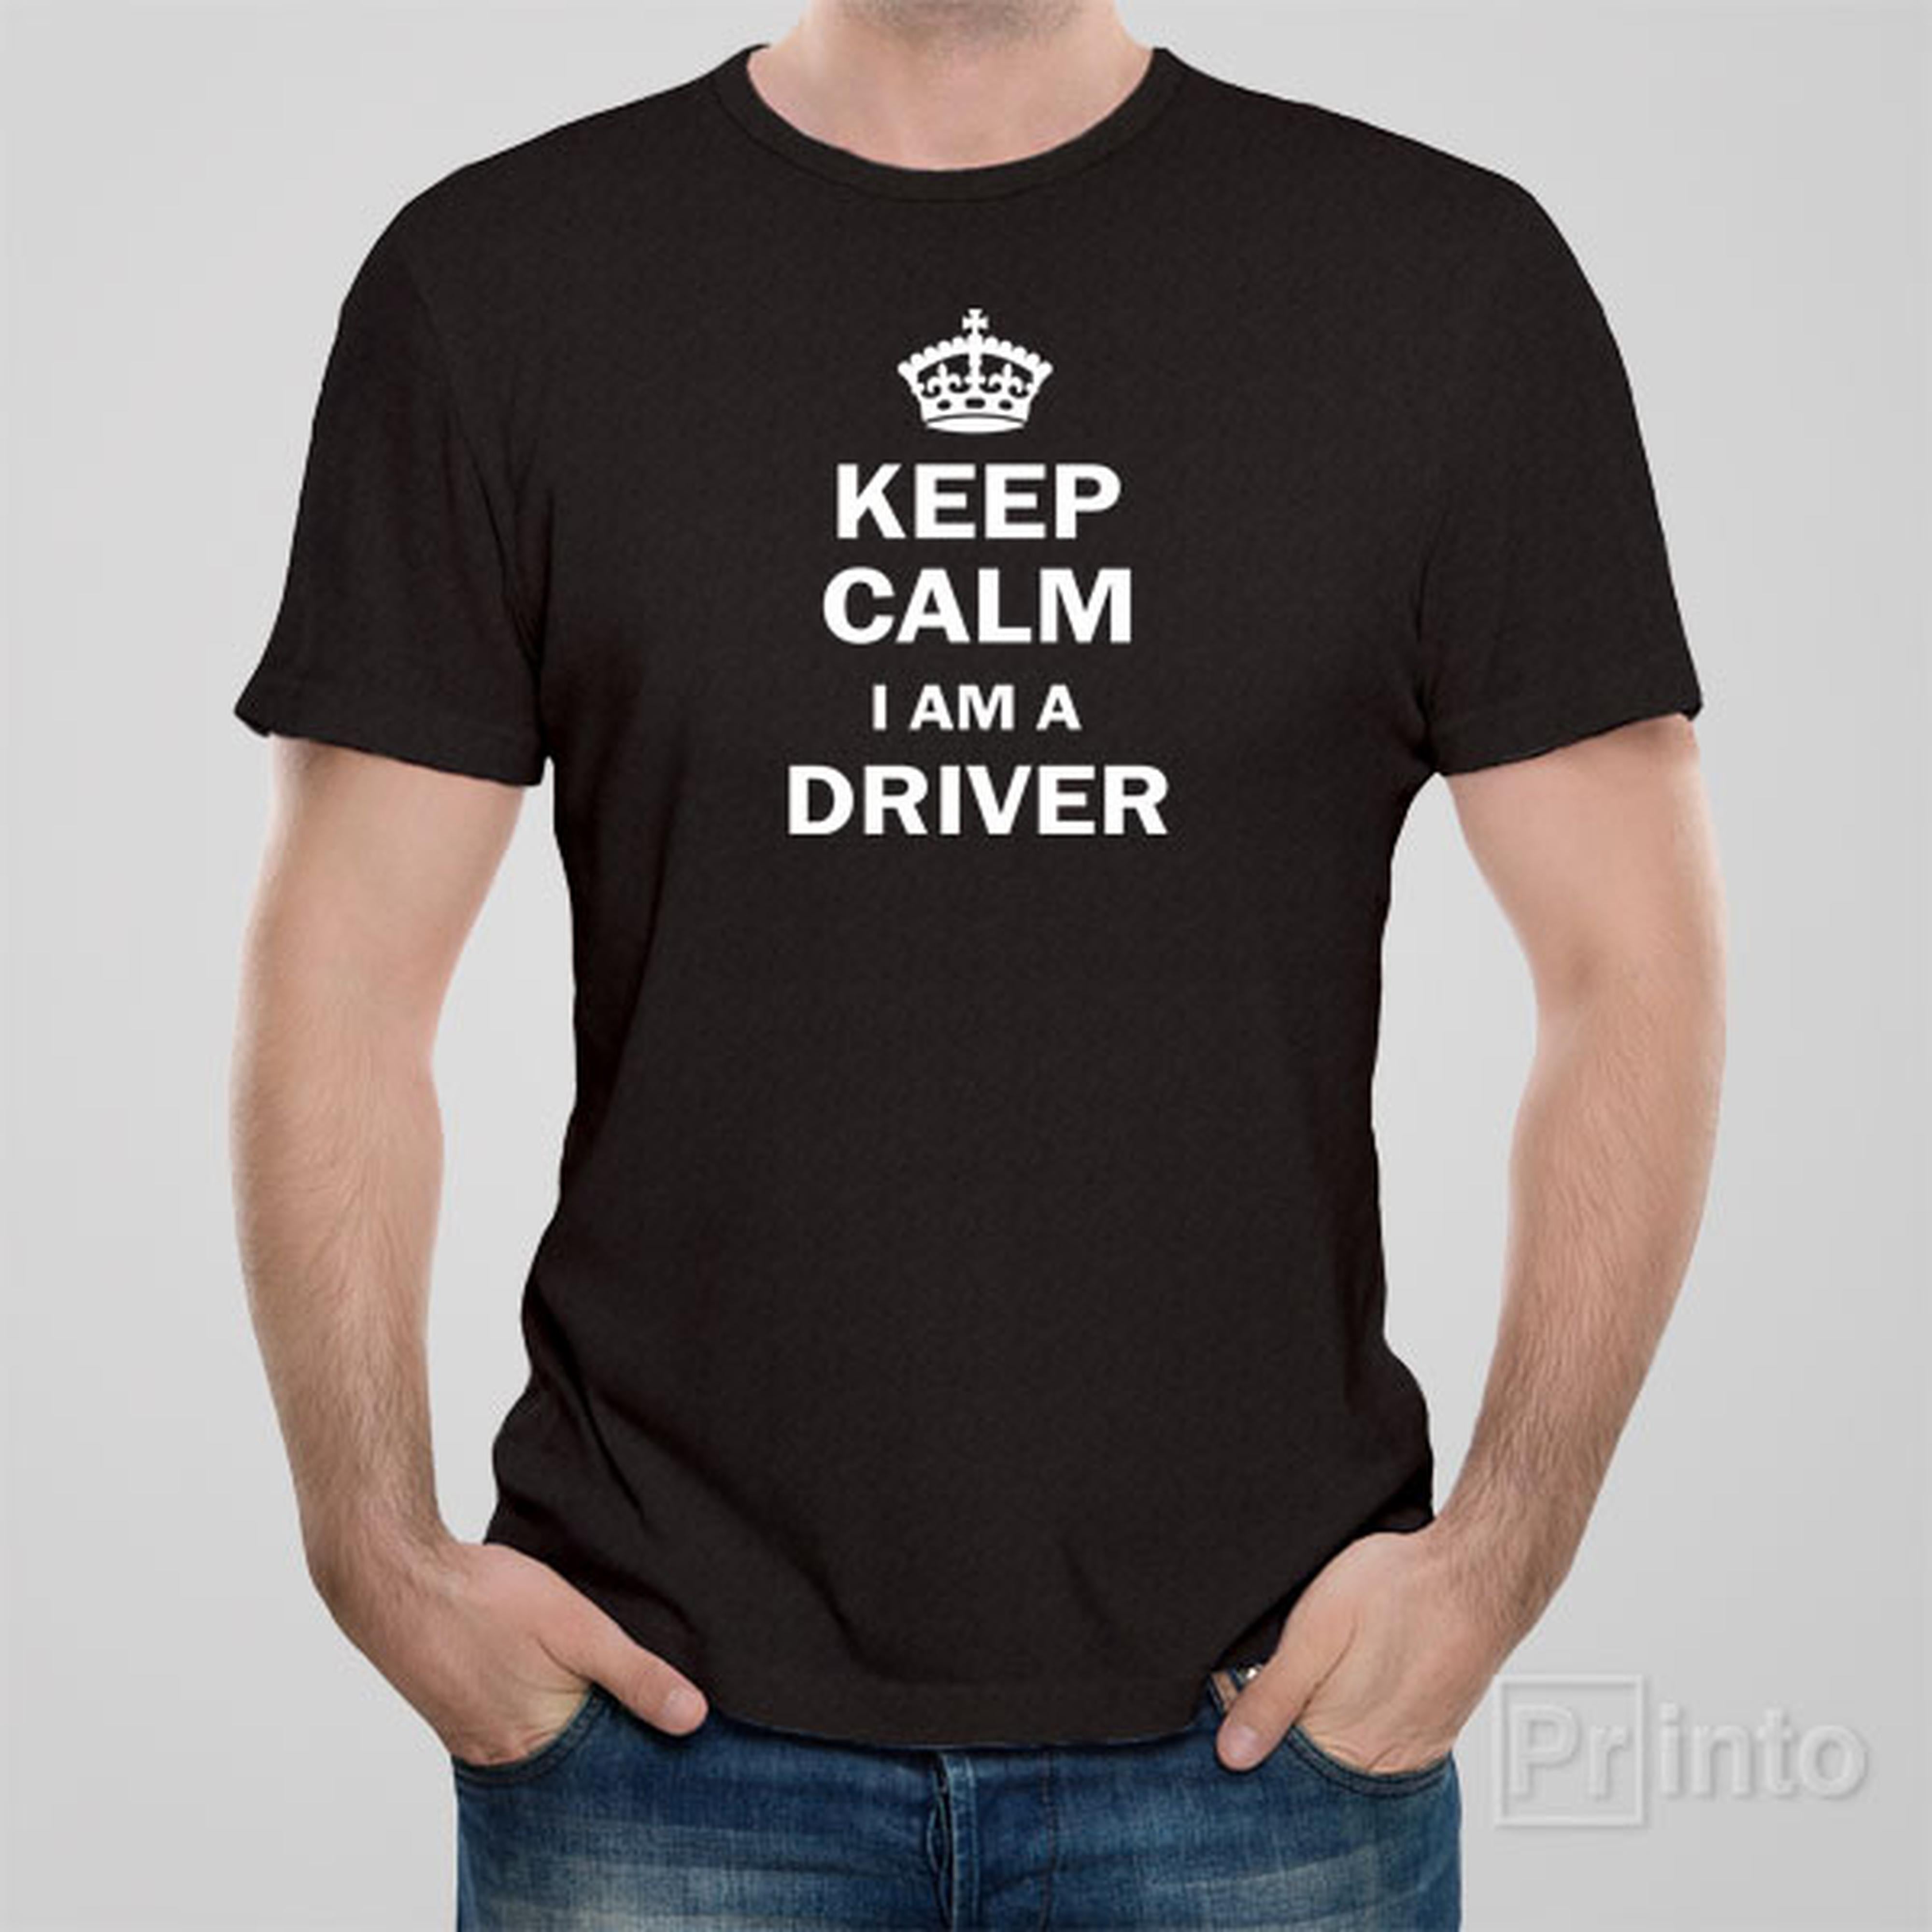 keep-calm-i-am-a-driver-t-shirt